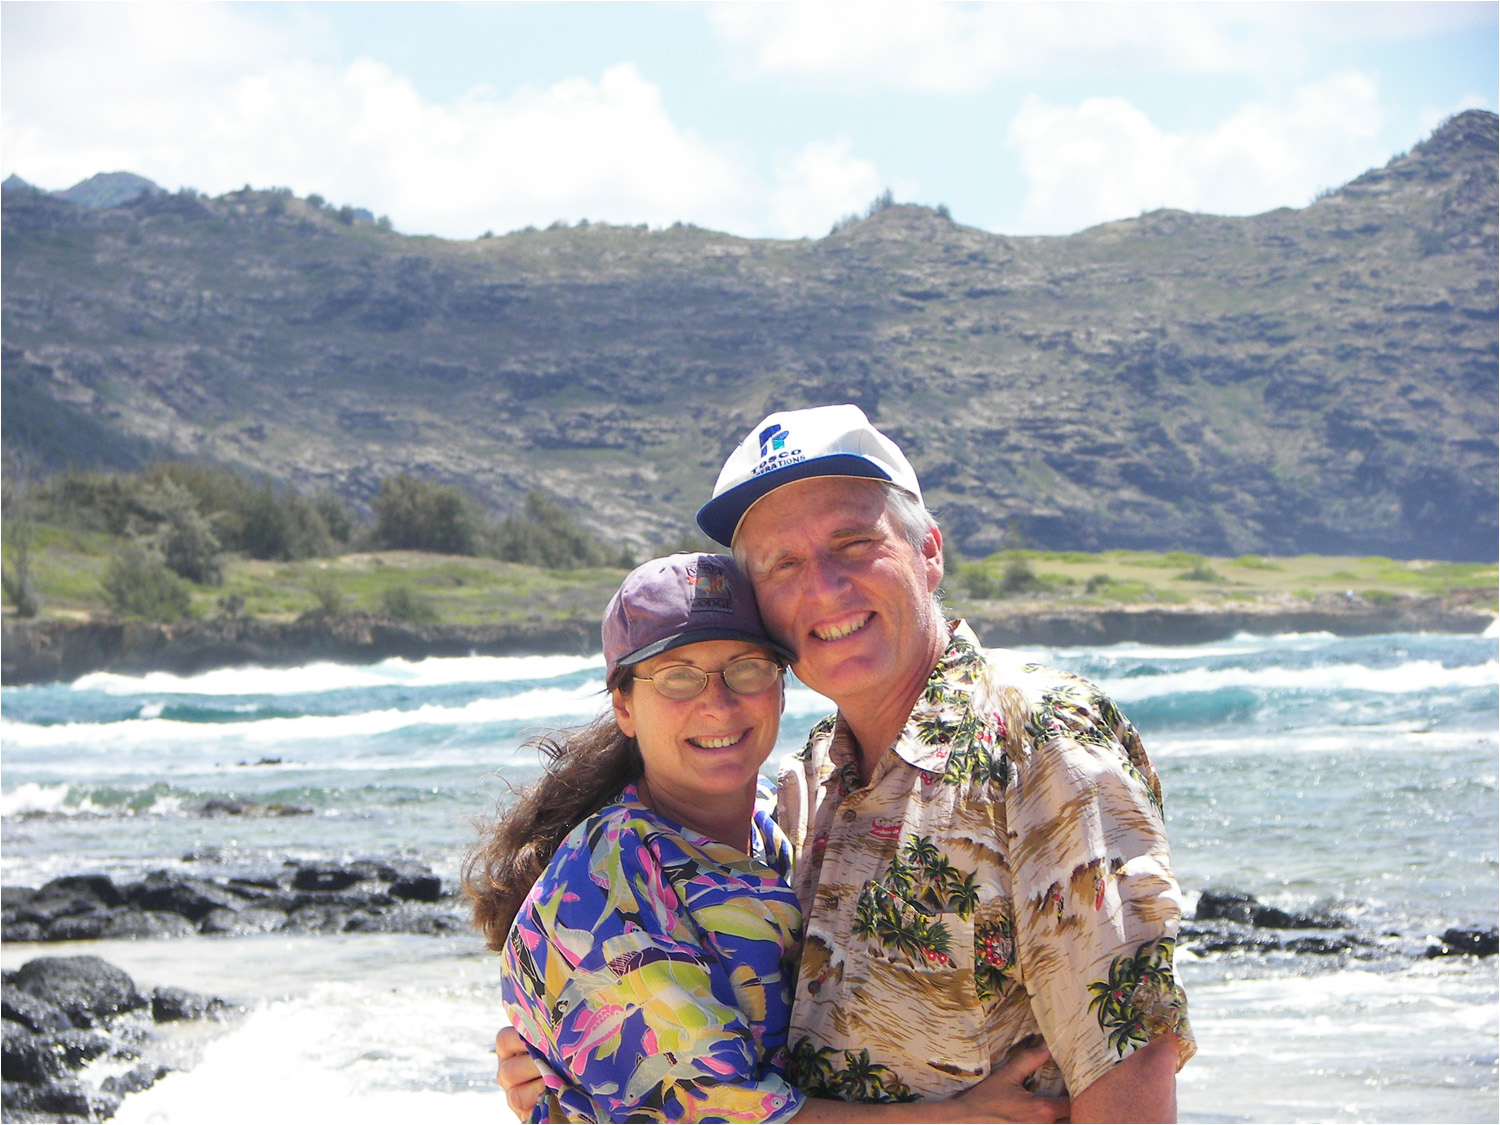 Bob and Kath at Maha'ulepu Beach.